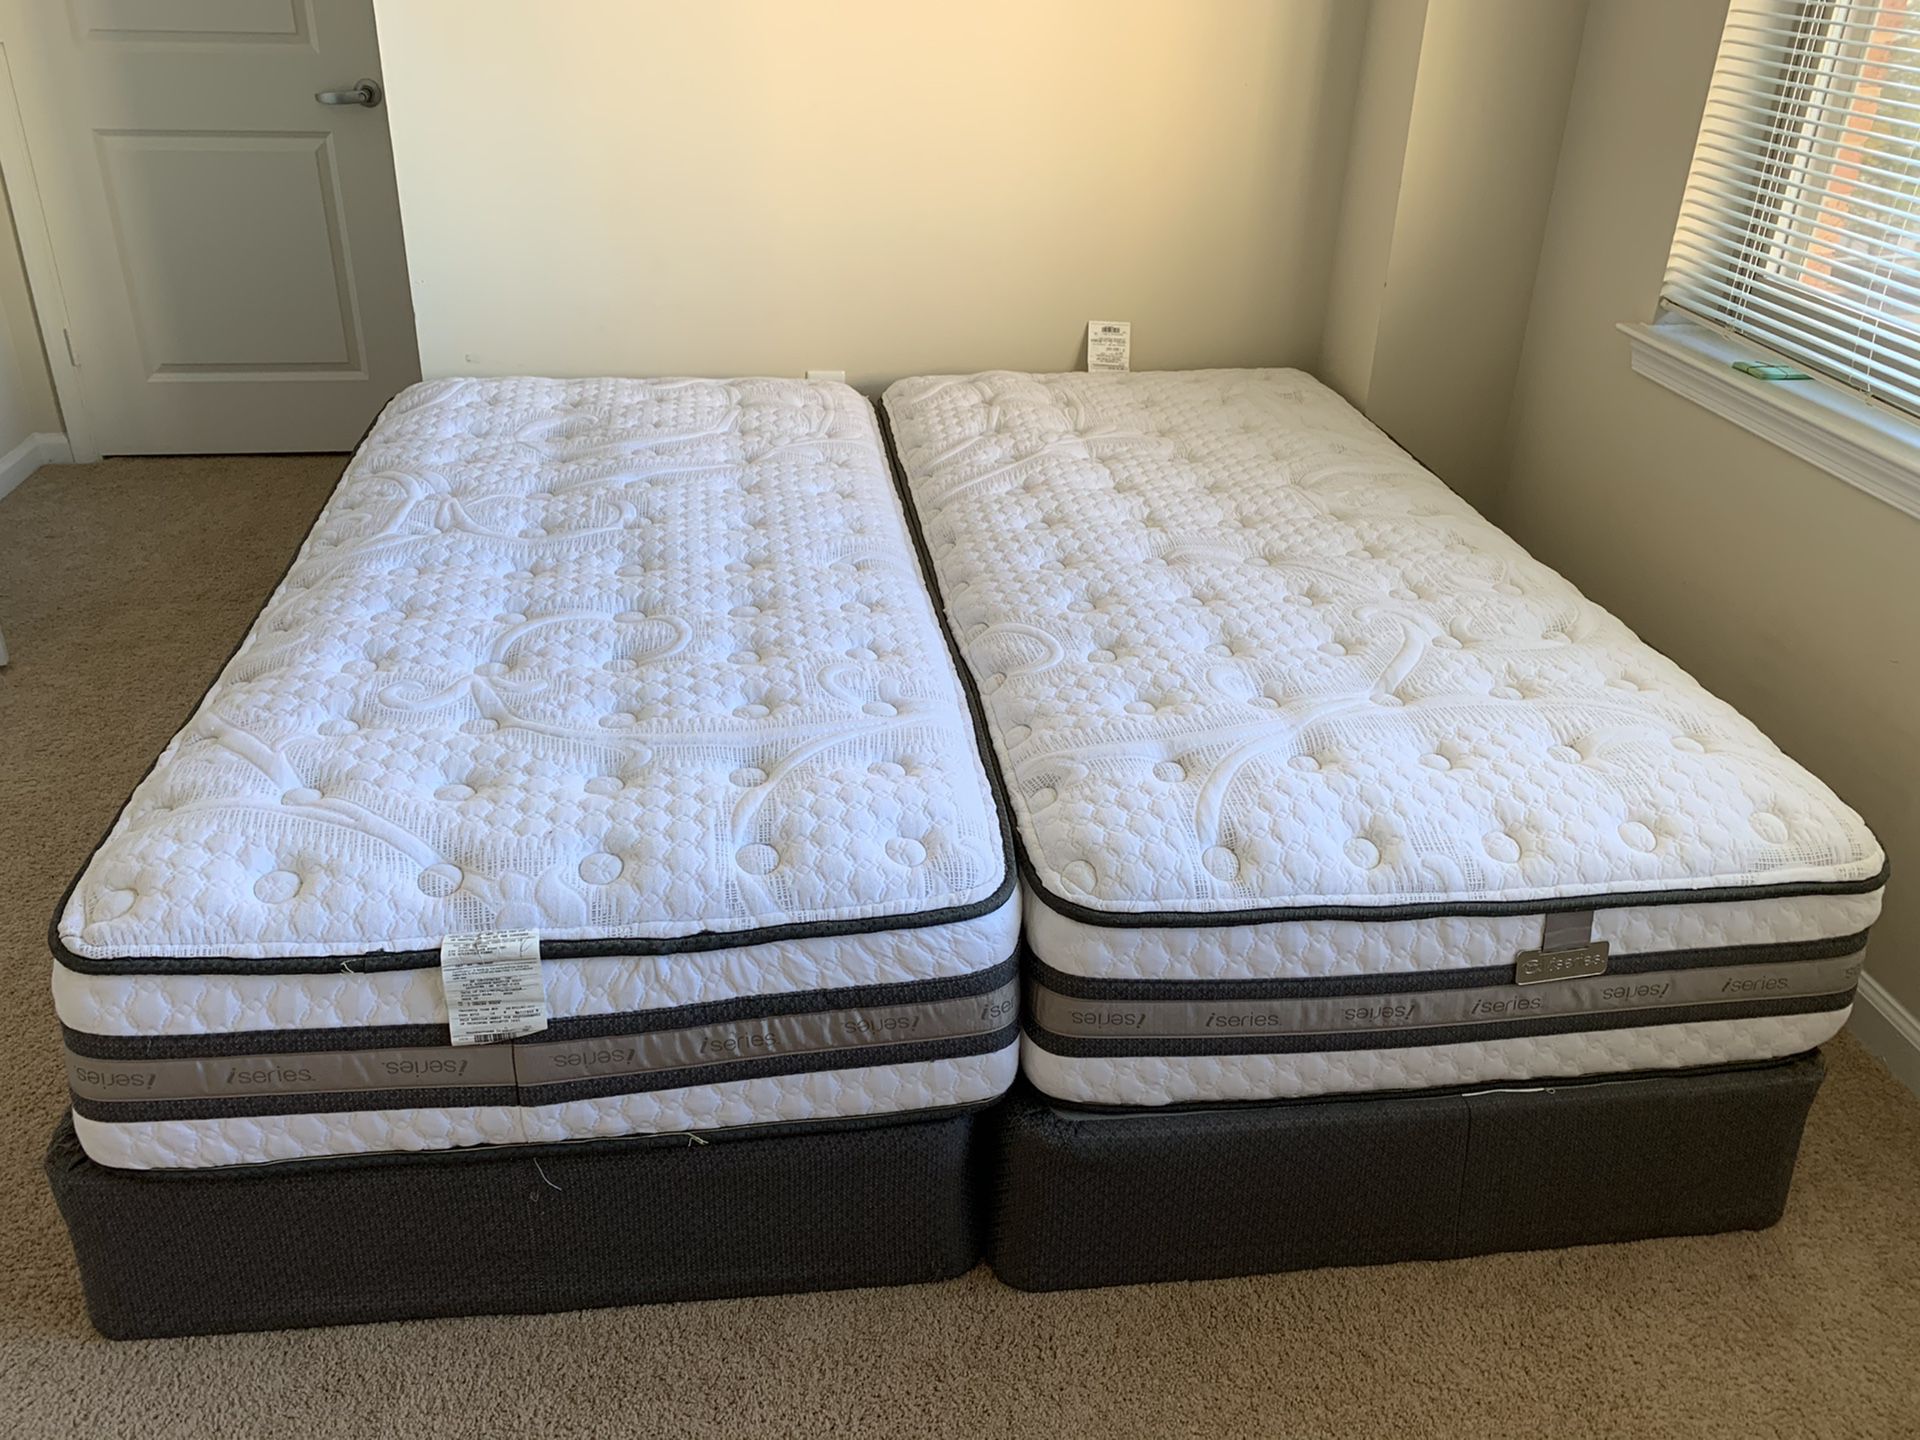 Both twin mattresses